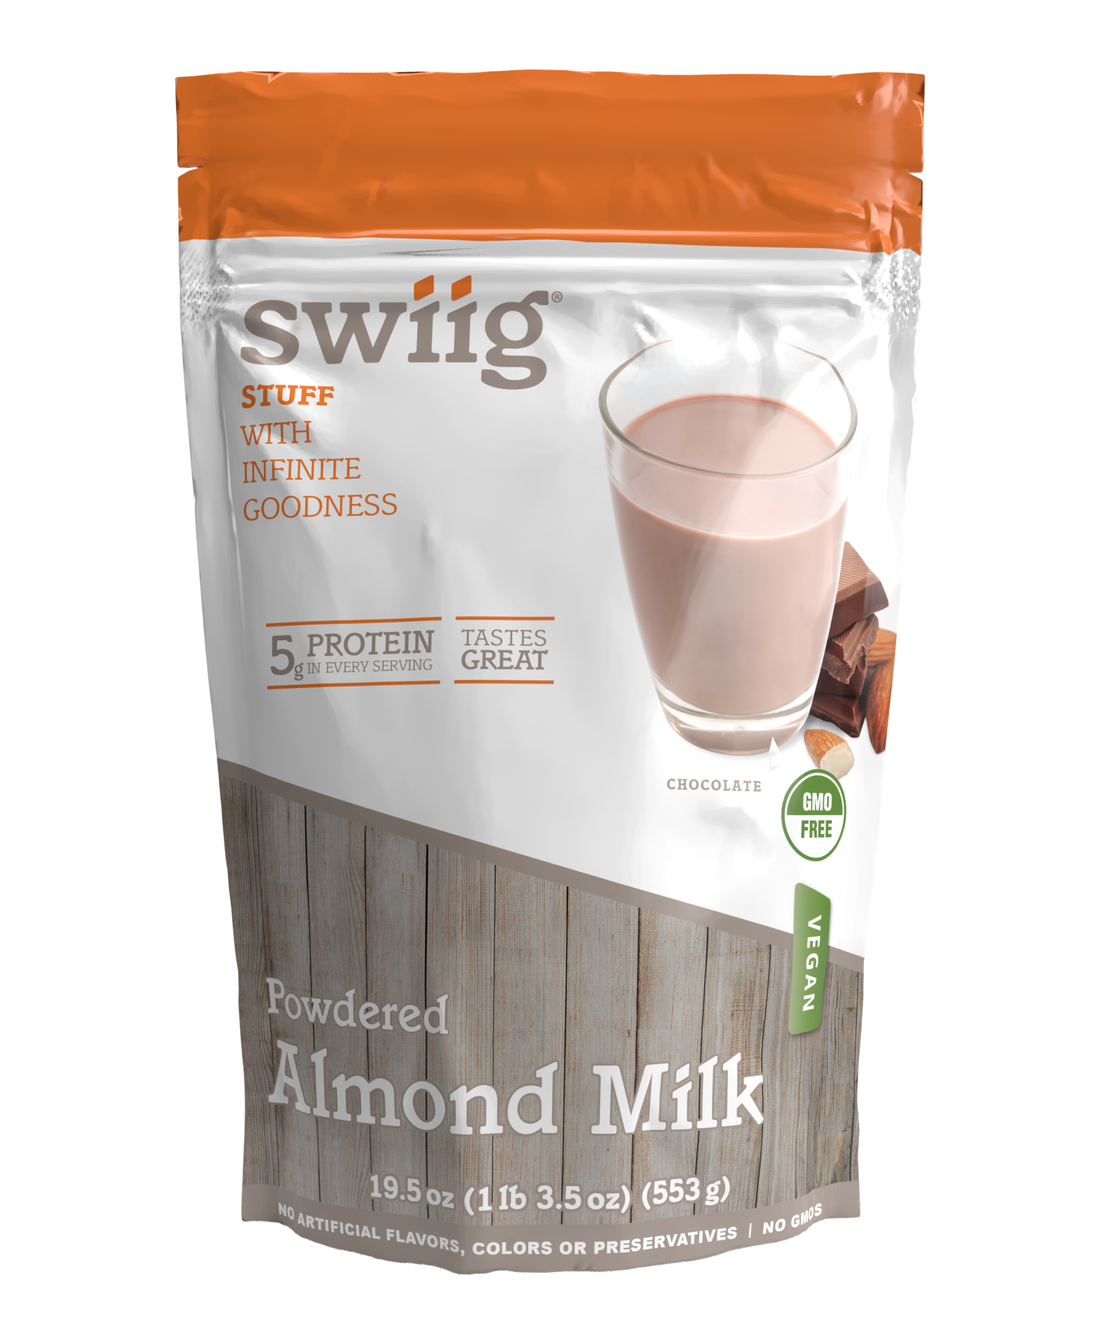 Powdered Almond milk chocolate flavored